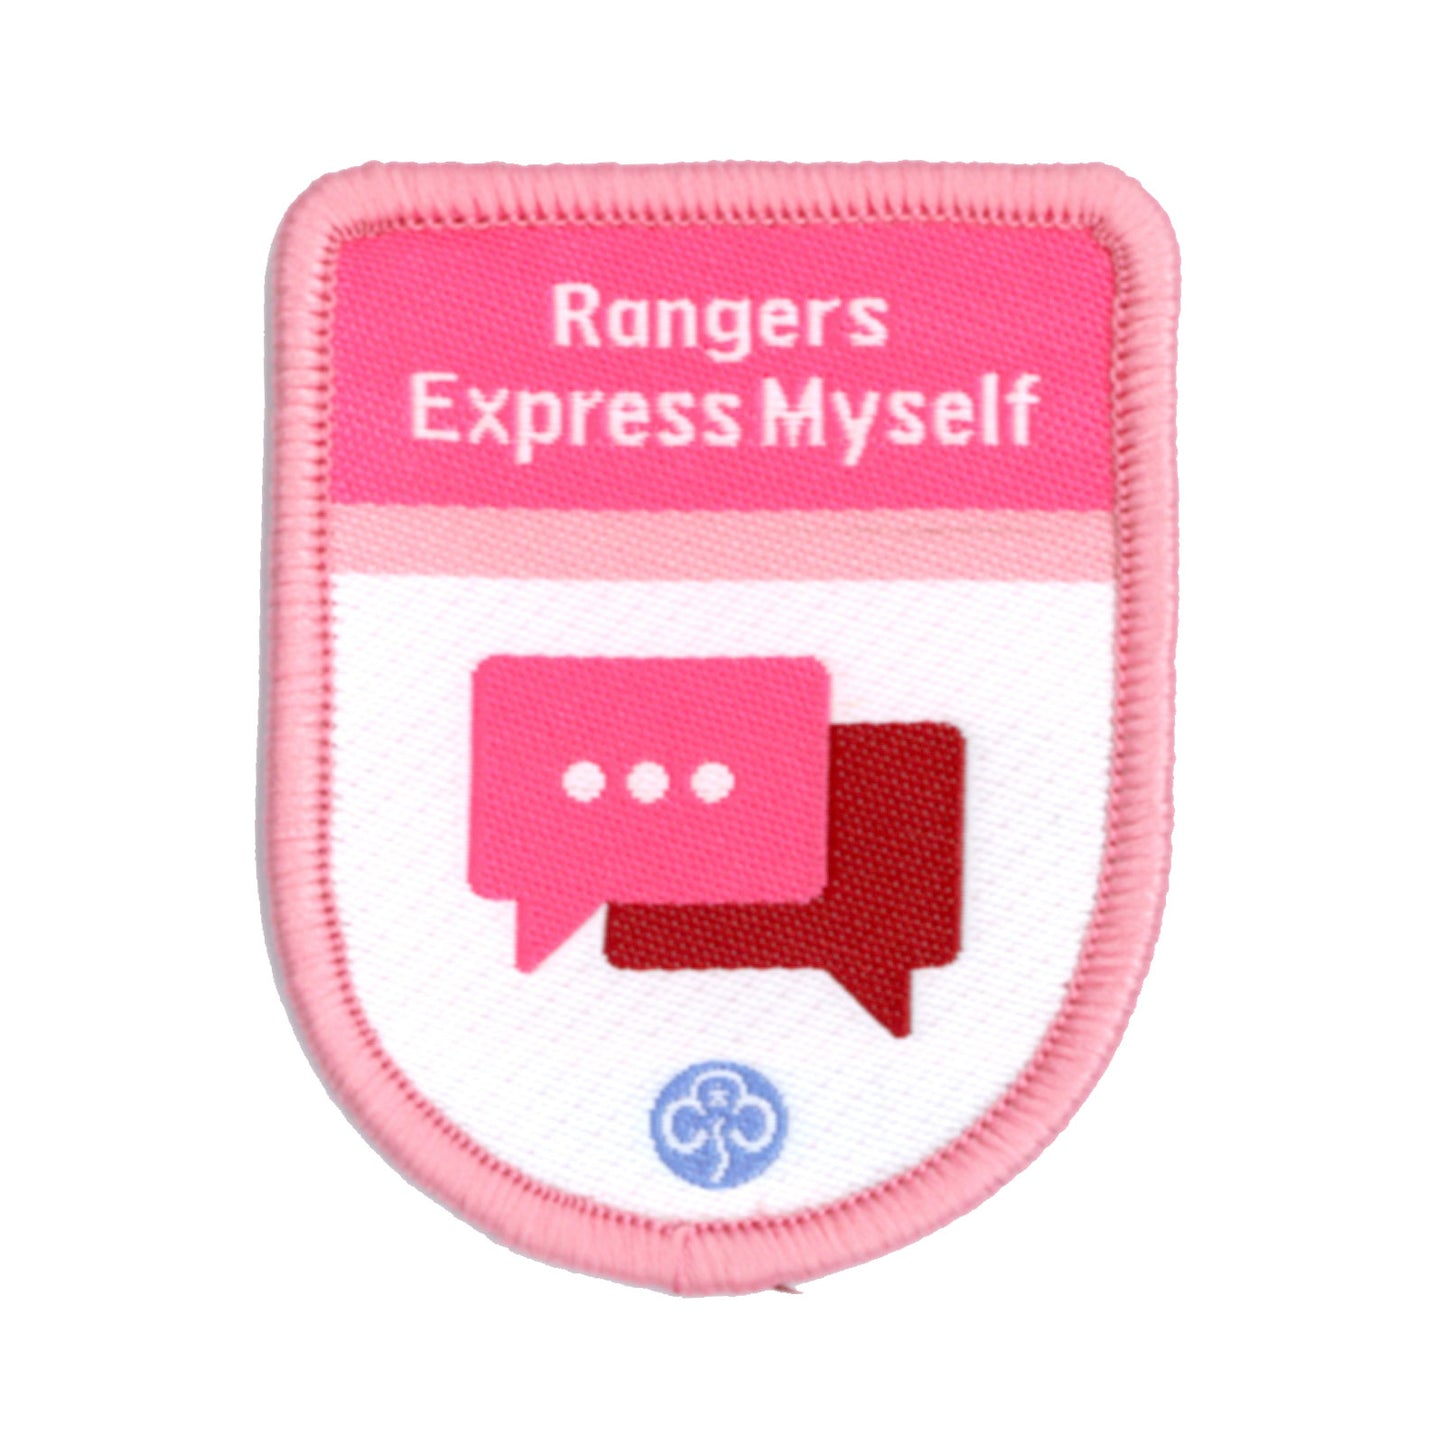 Rangers Express Myself Theme Award Woven Badge